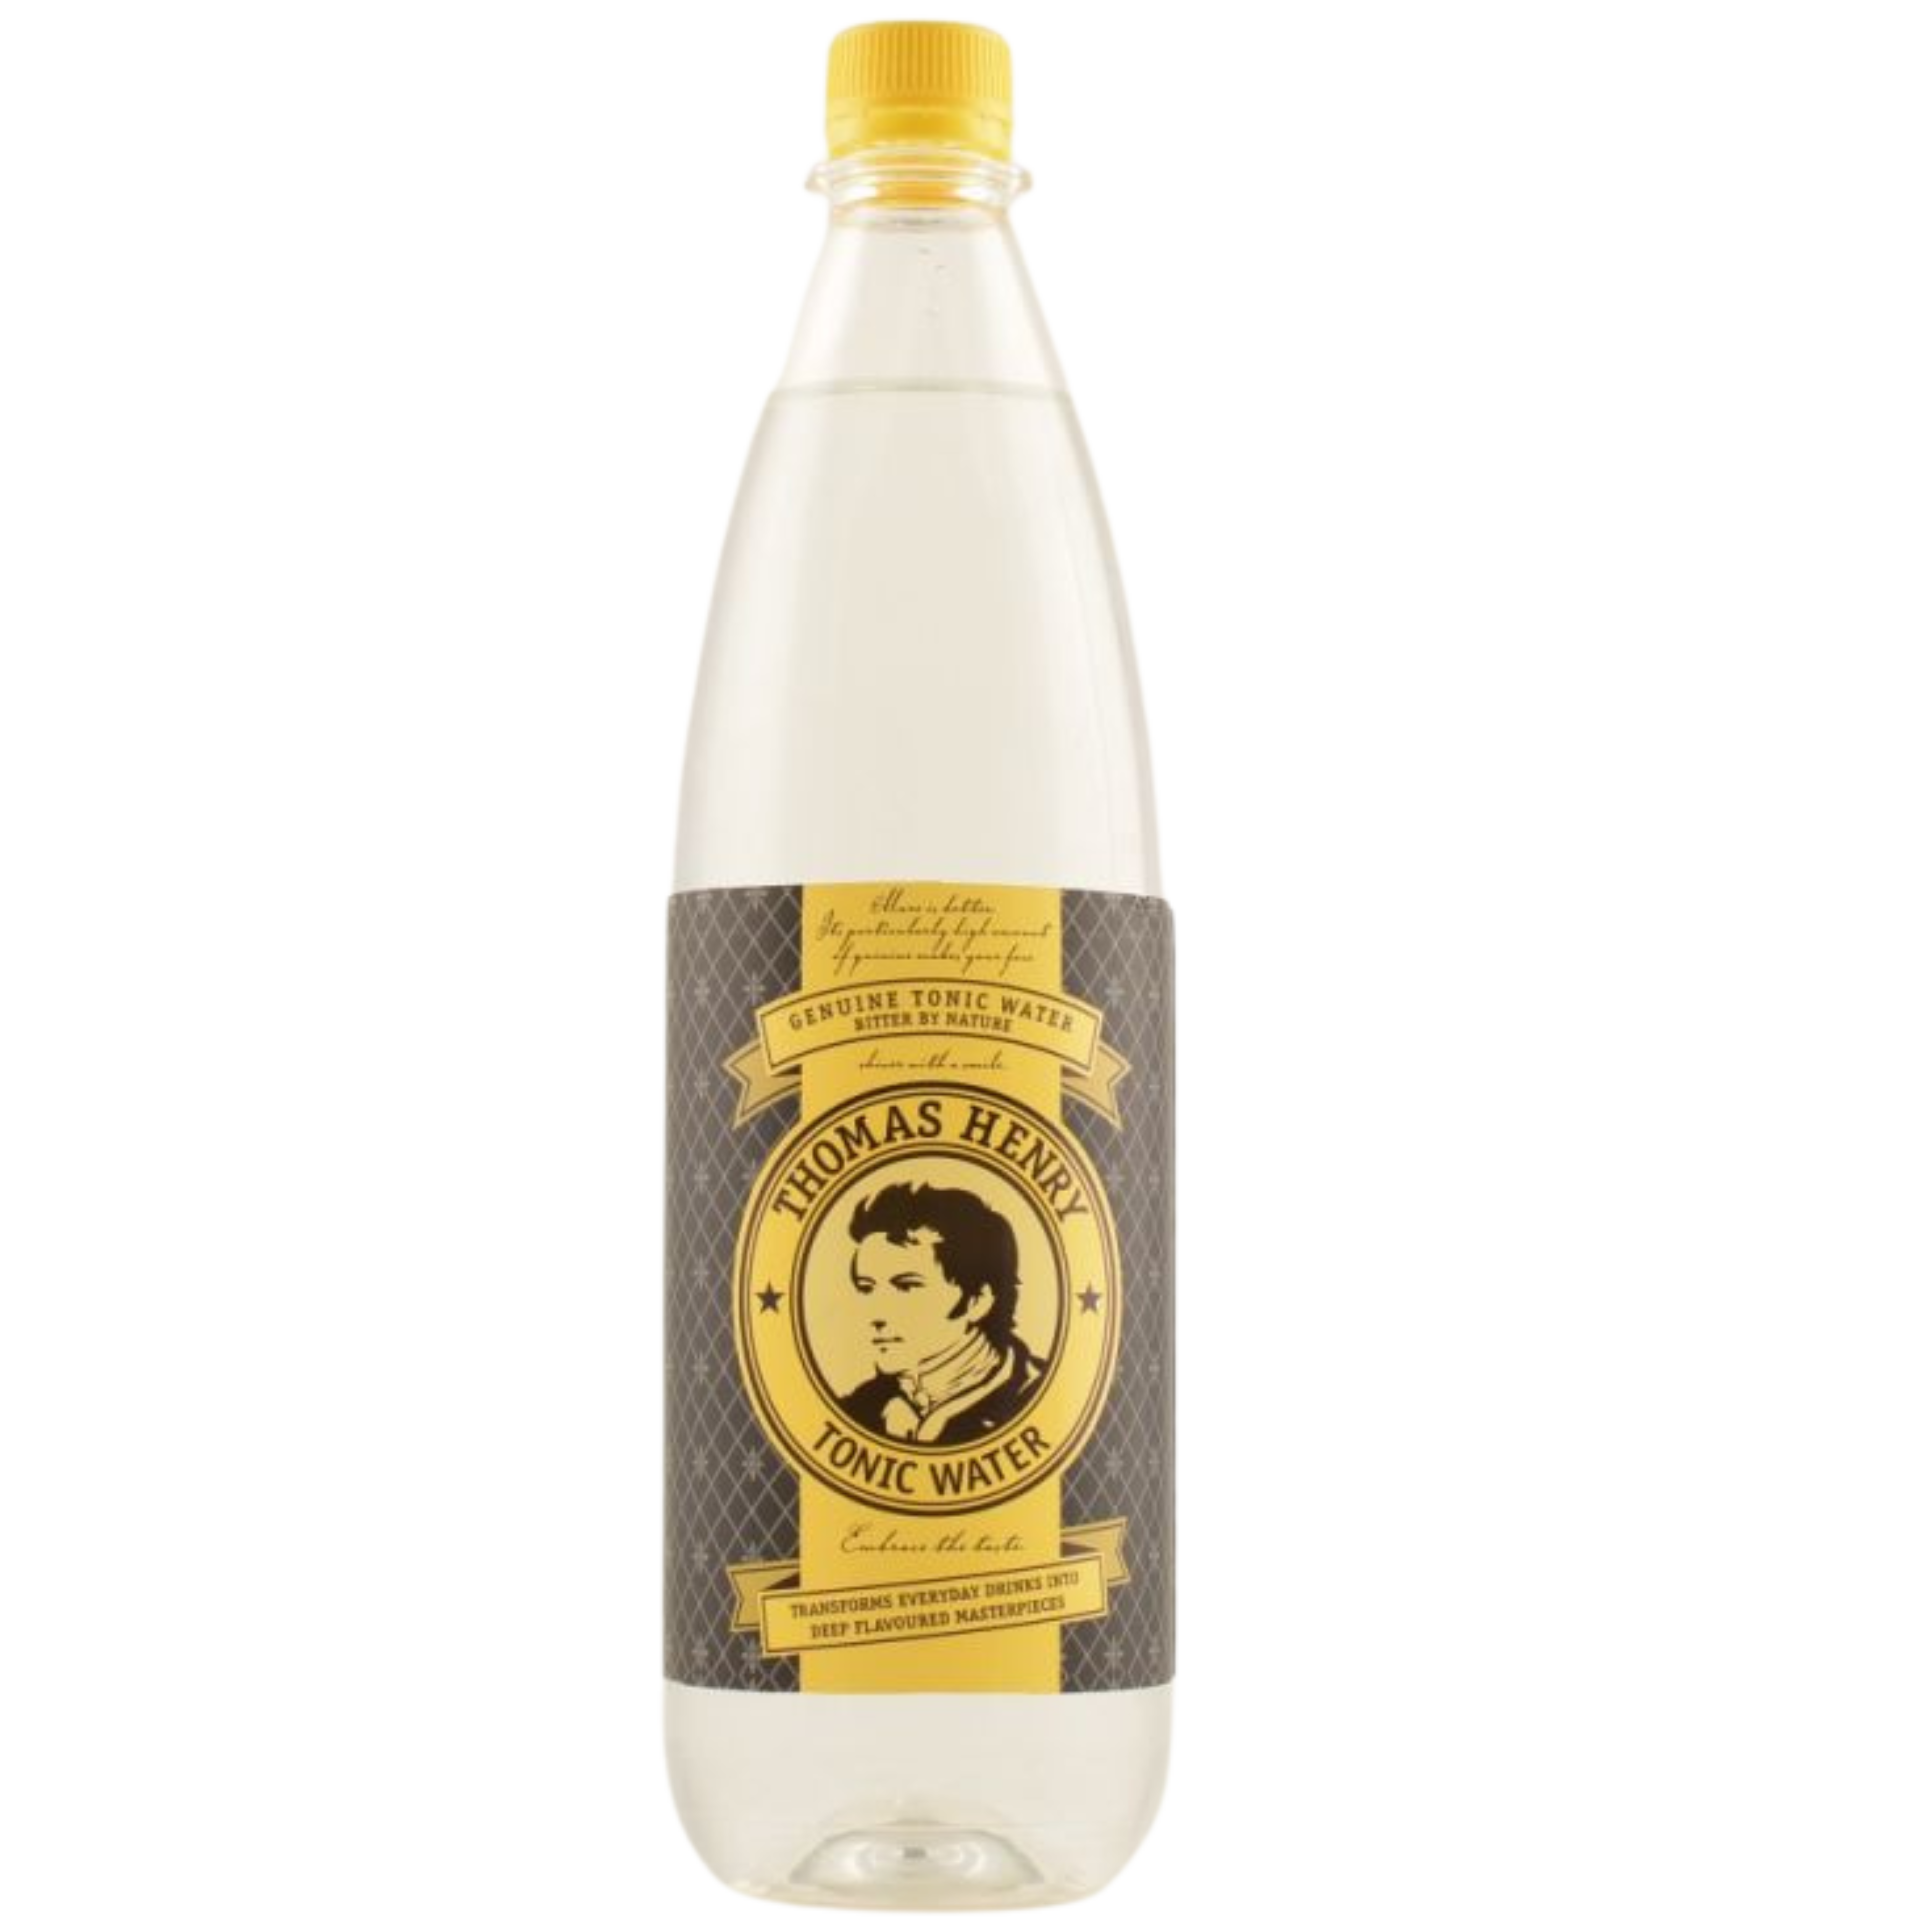 Thomas Henry Tonic Water 1 Liter Pet Flasche (kein Alkohol)